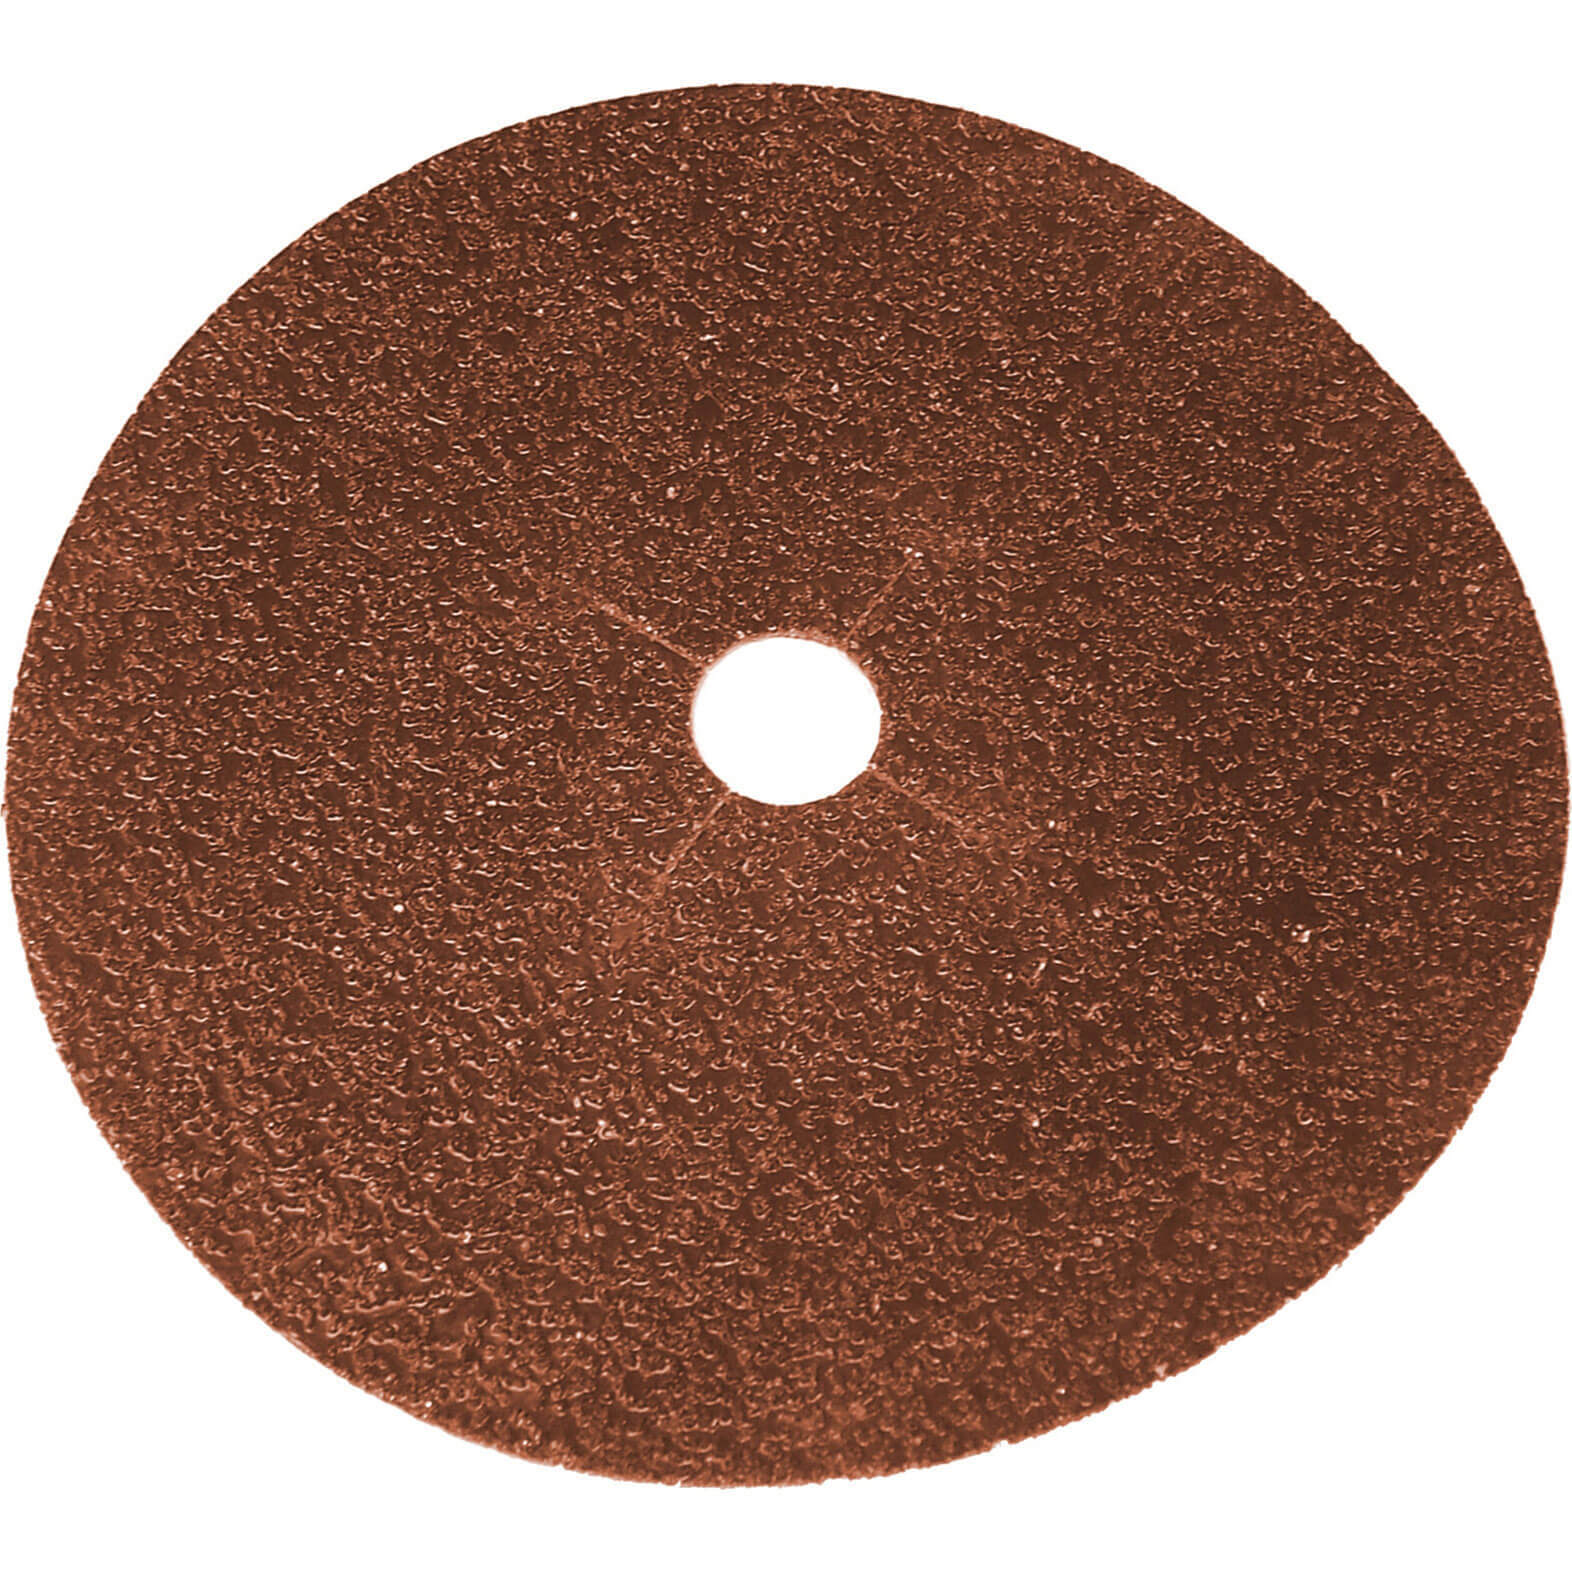 Image of Faithfull Aluminium Oxide Sanding Discs 178mm 120g